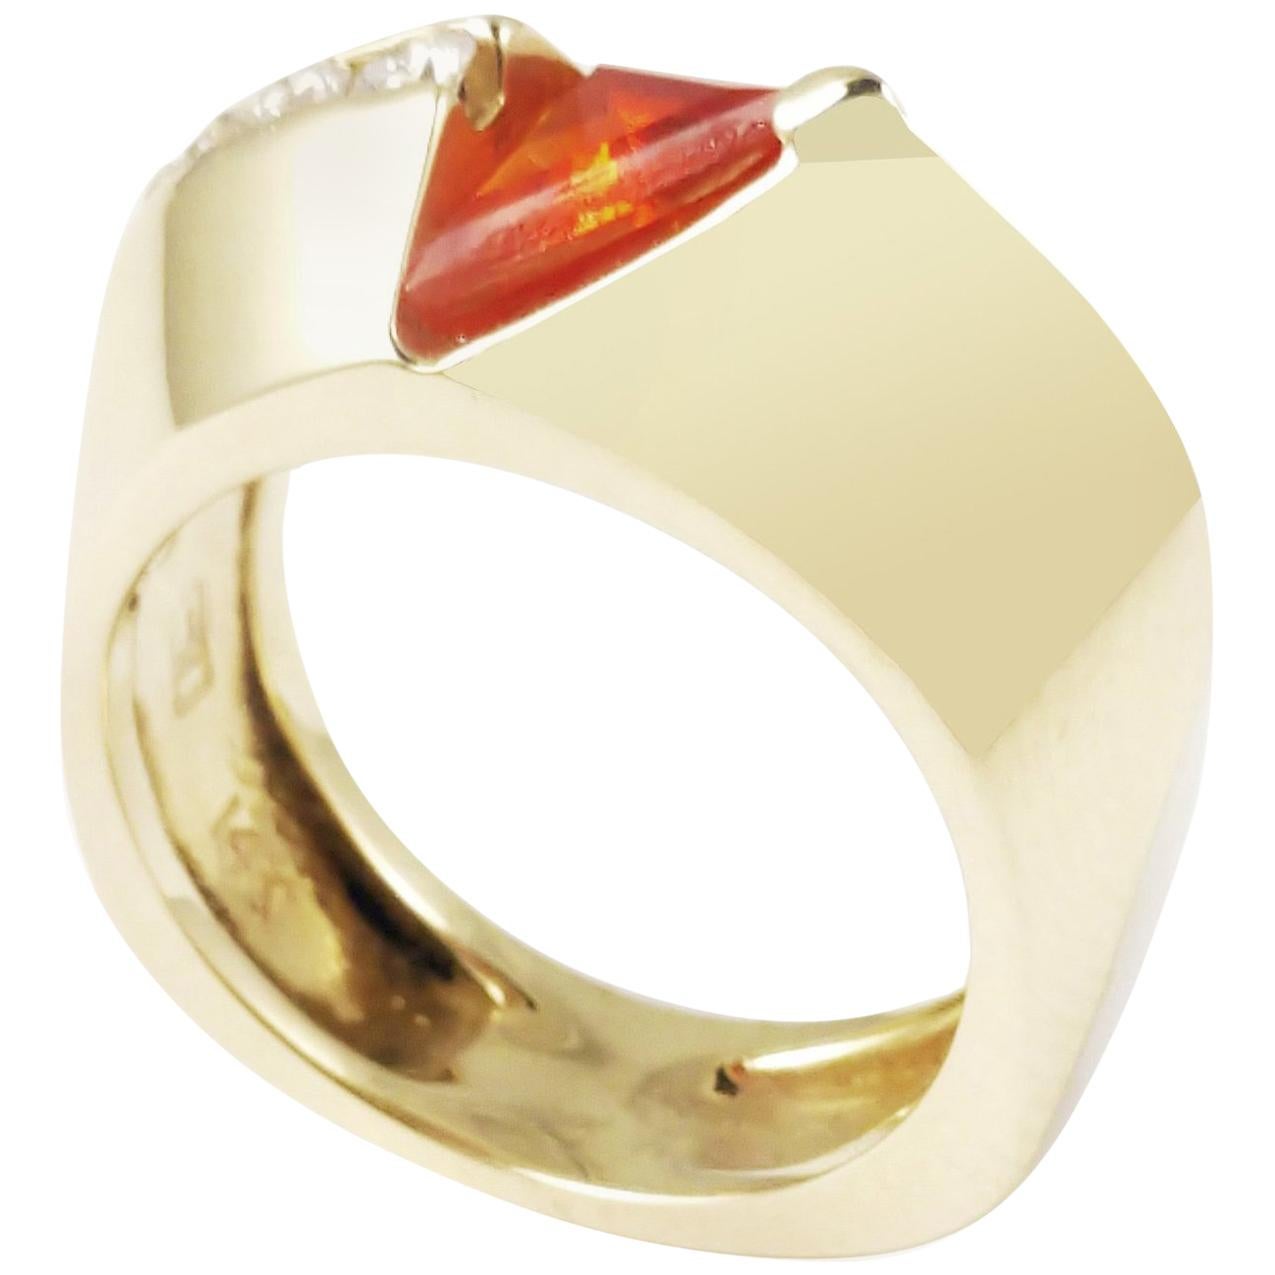 Statement Ring Fire Opal Diamond 14 Karat Yellow Gold Contemporary Art Fashion For Sale